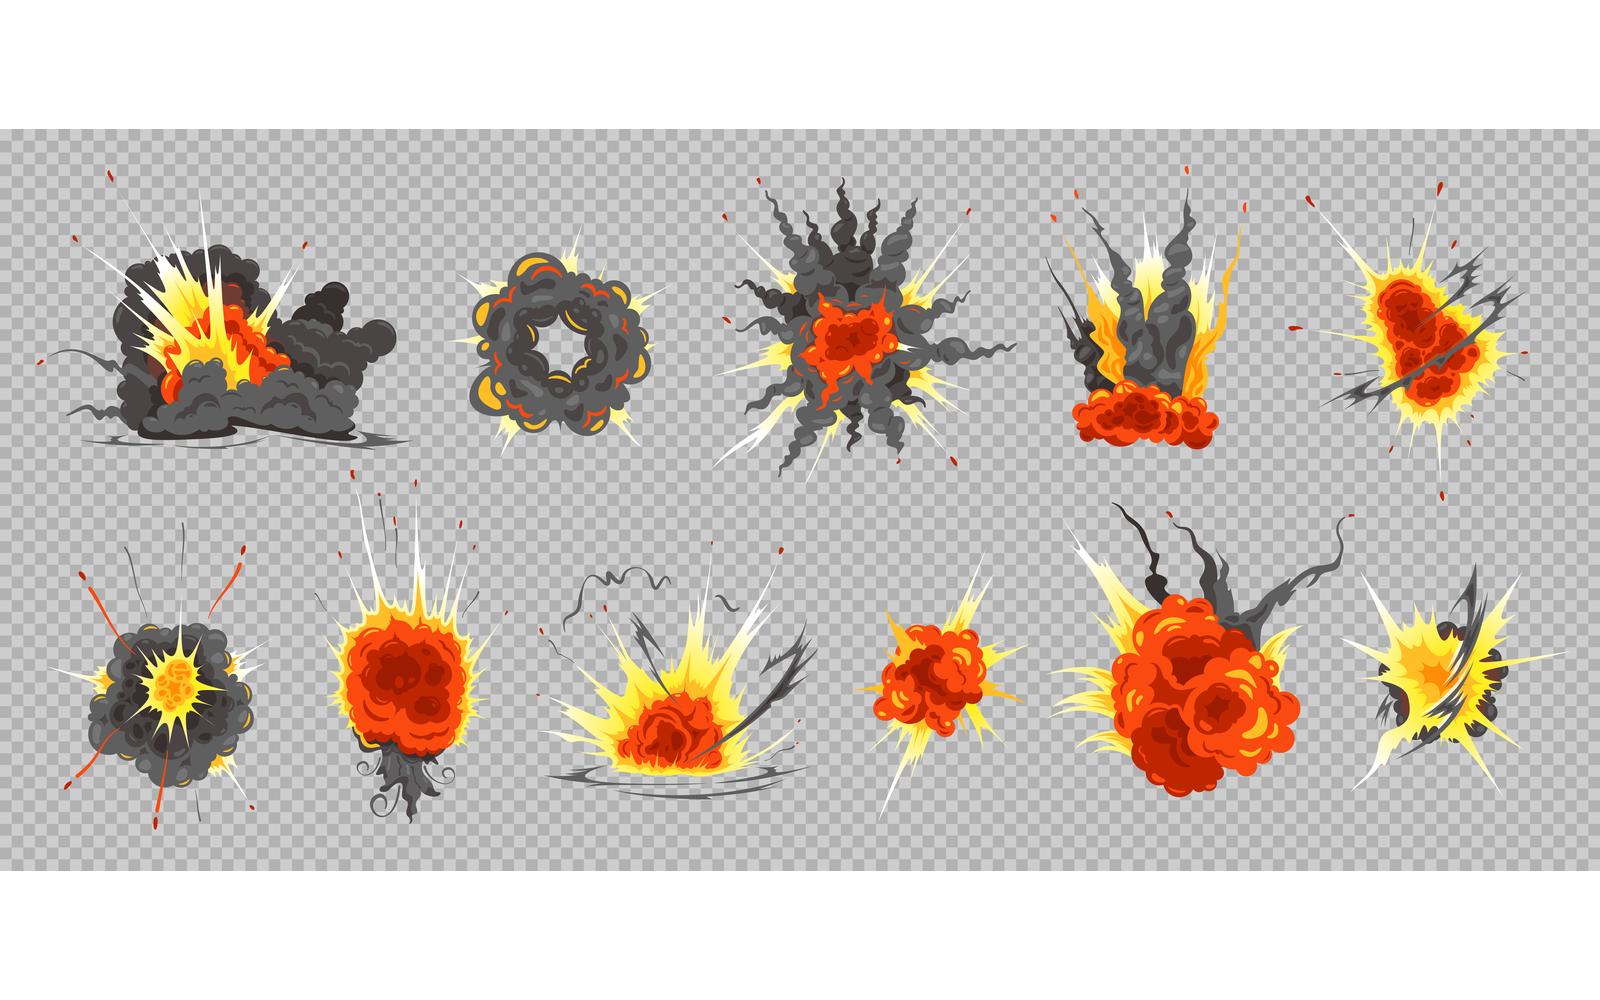 Bomb Explosion Fire Bang Transparent Set 201251809 Vector Illustration Concept